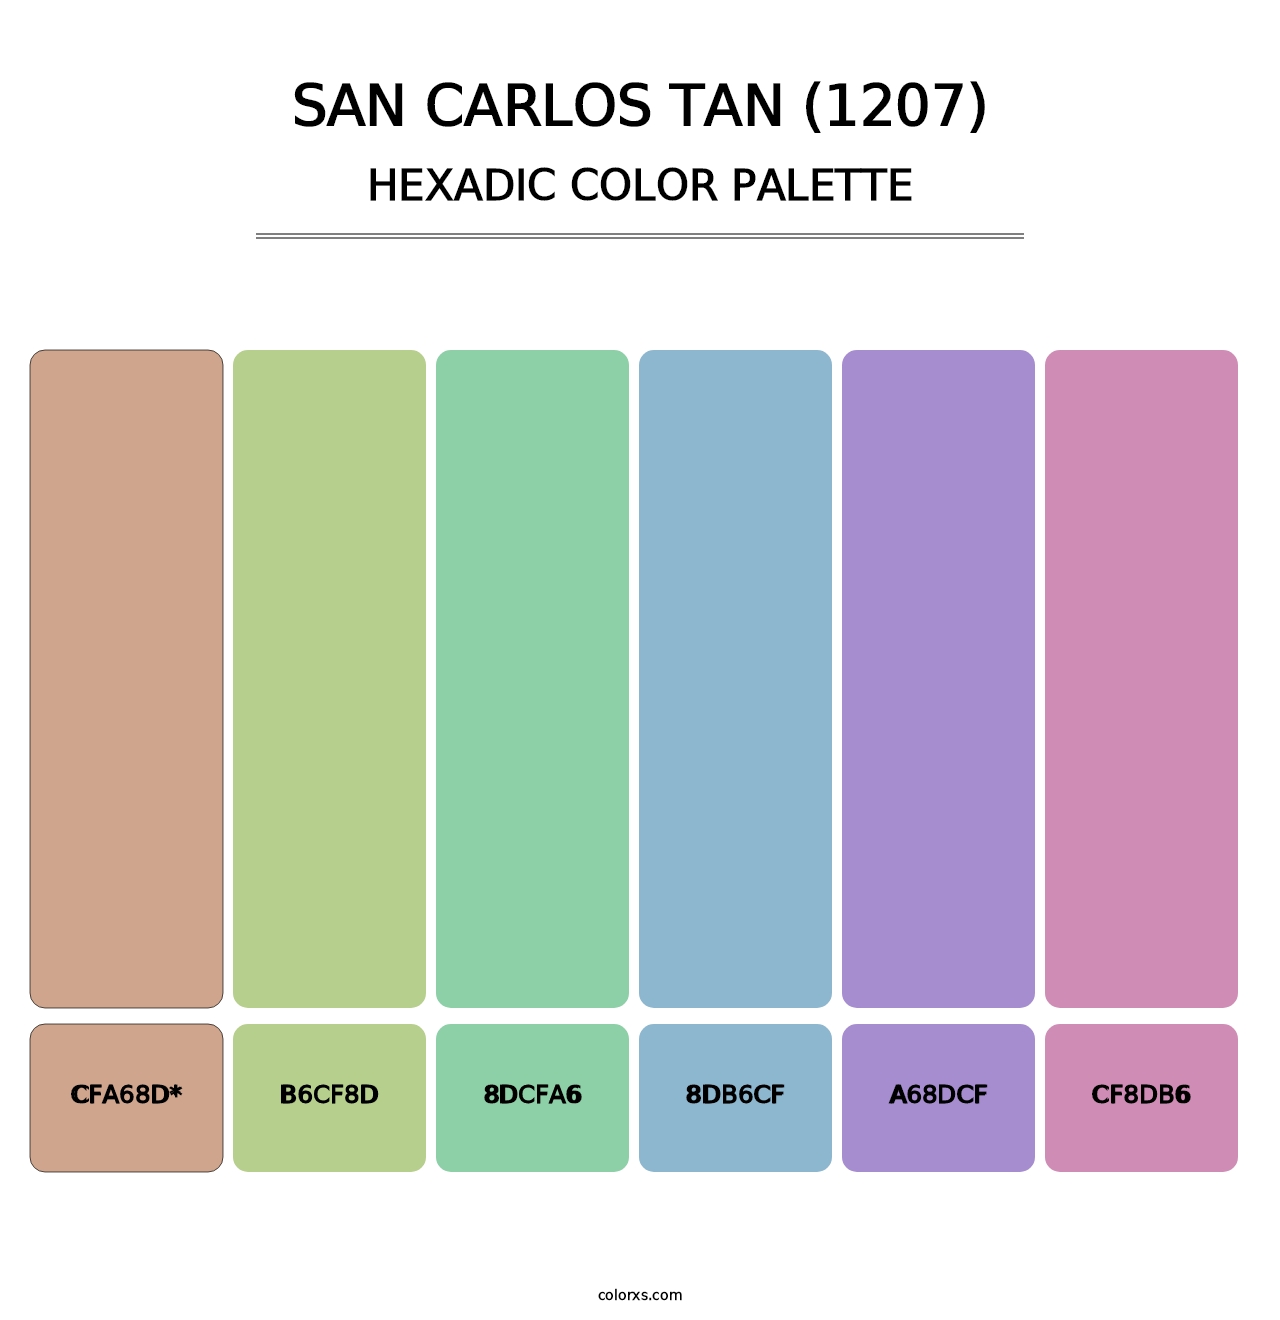 San Carlos Tan (1207) - Hexadic Color Palette